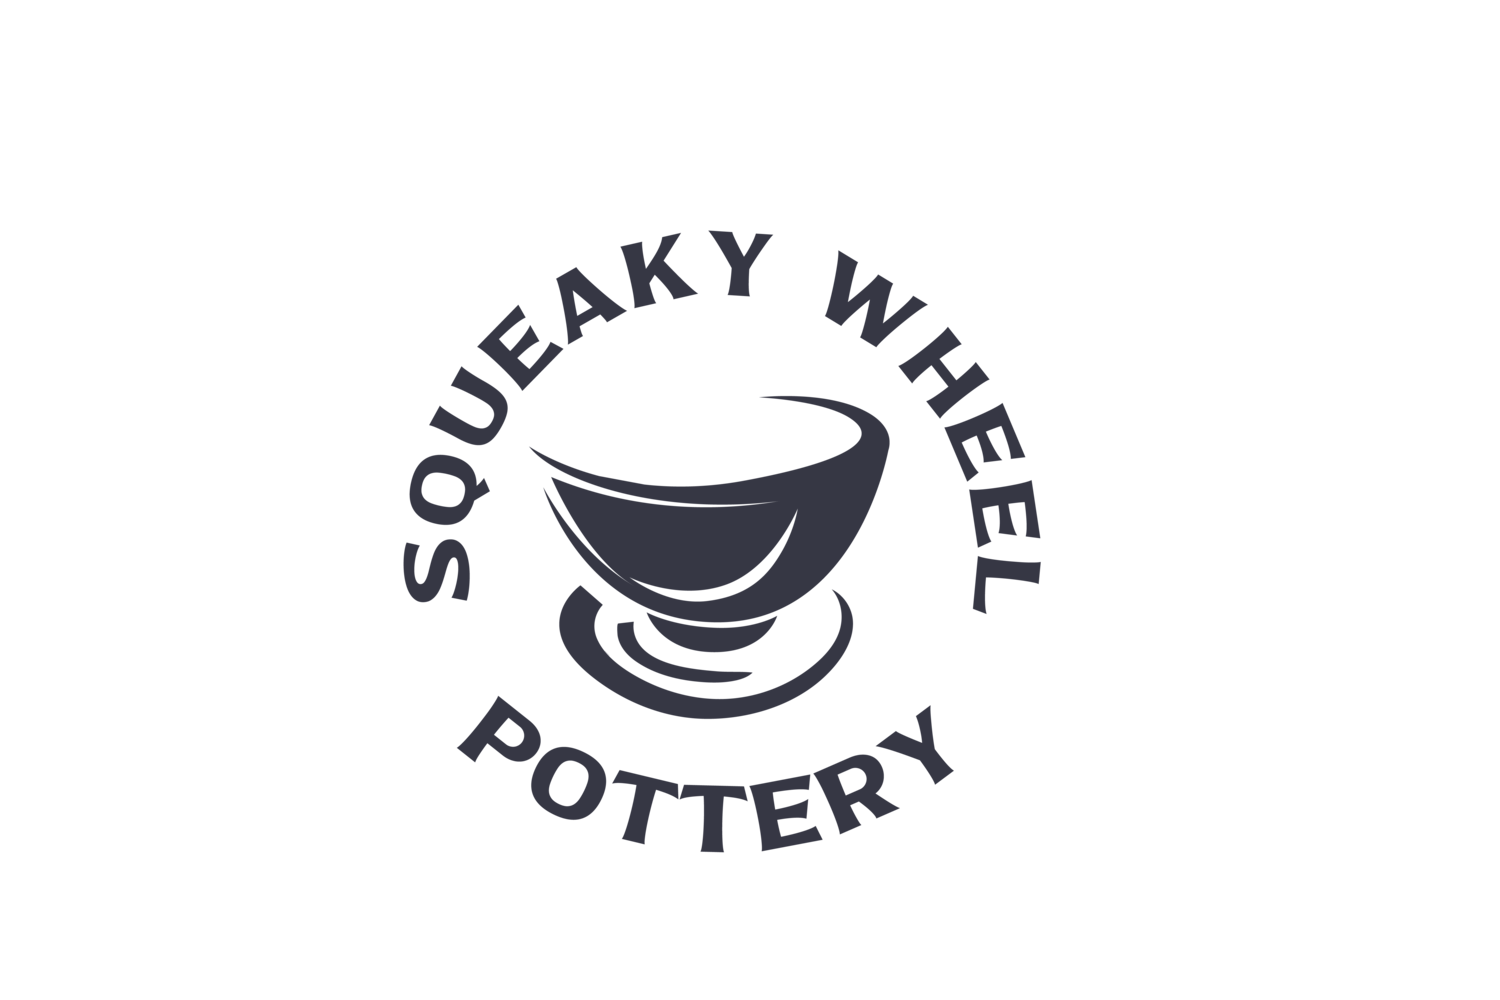 Squeaky Wheel Pottery